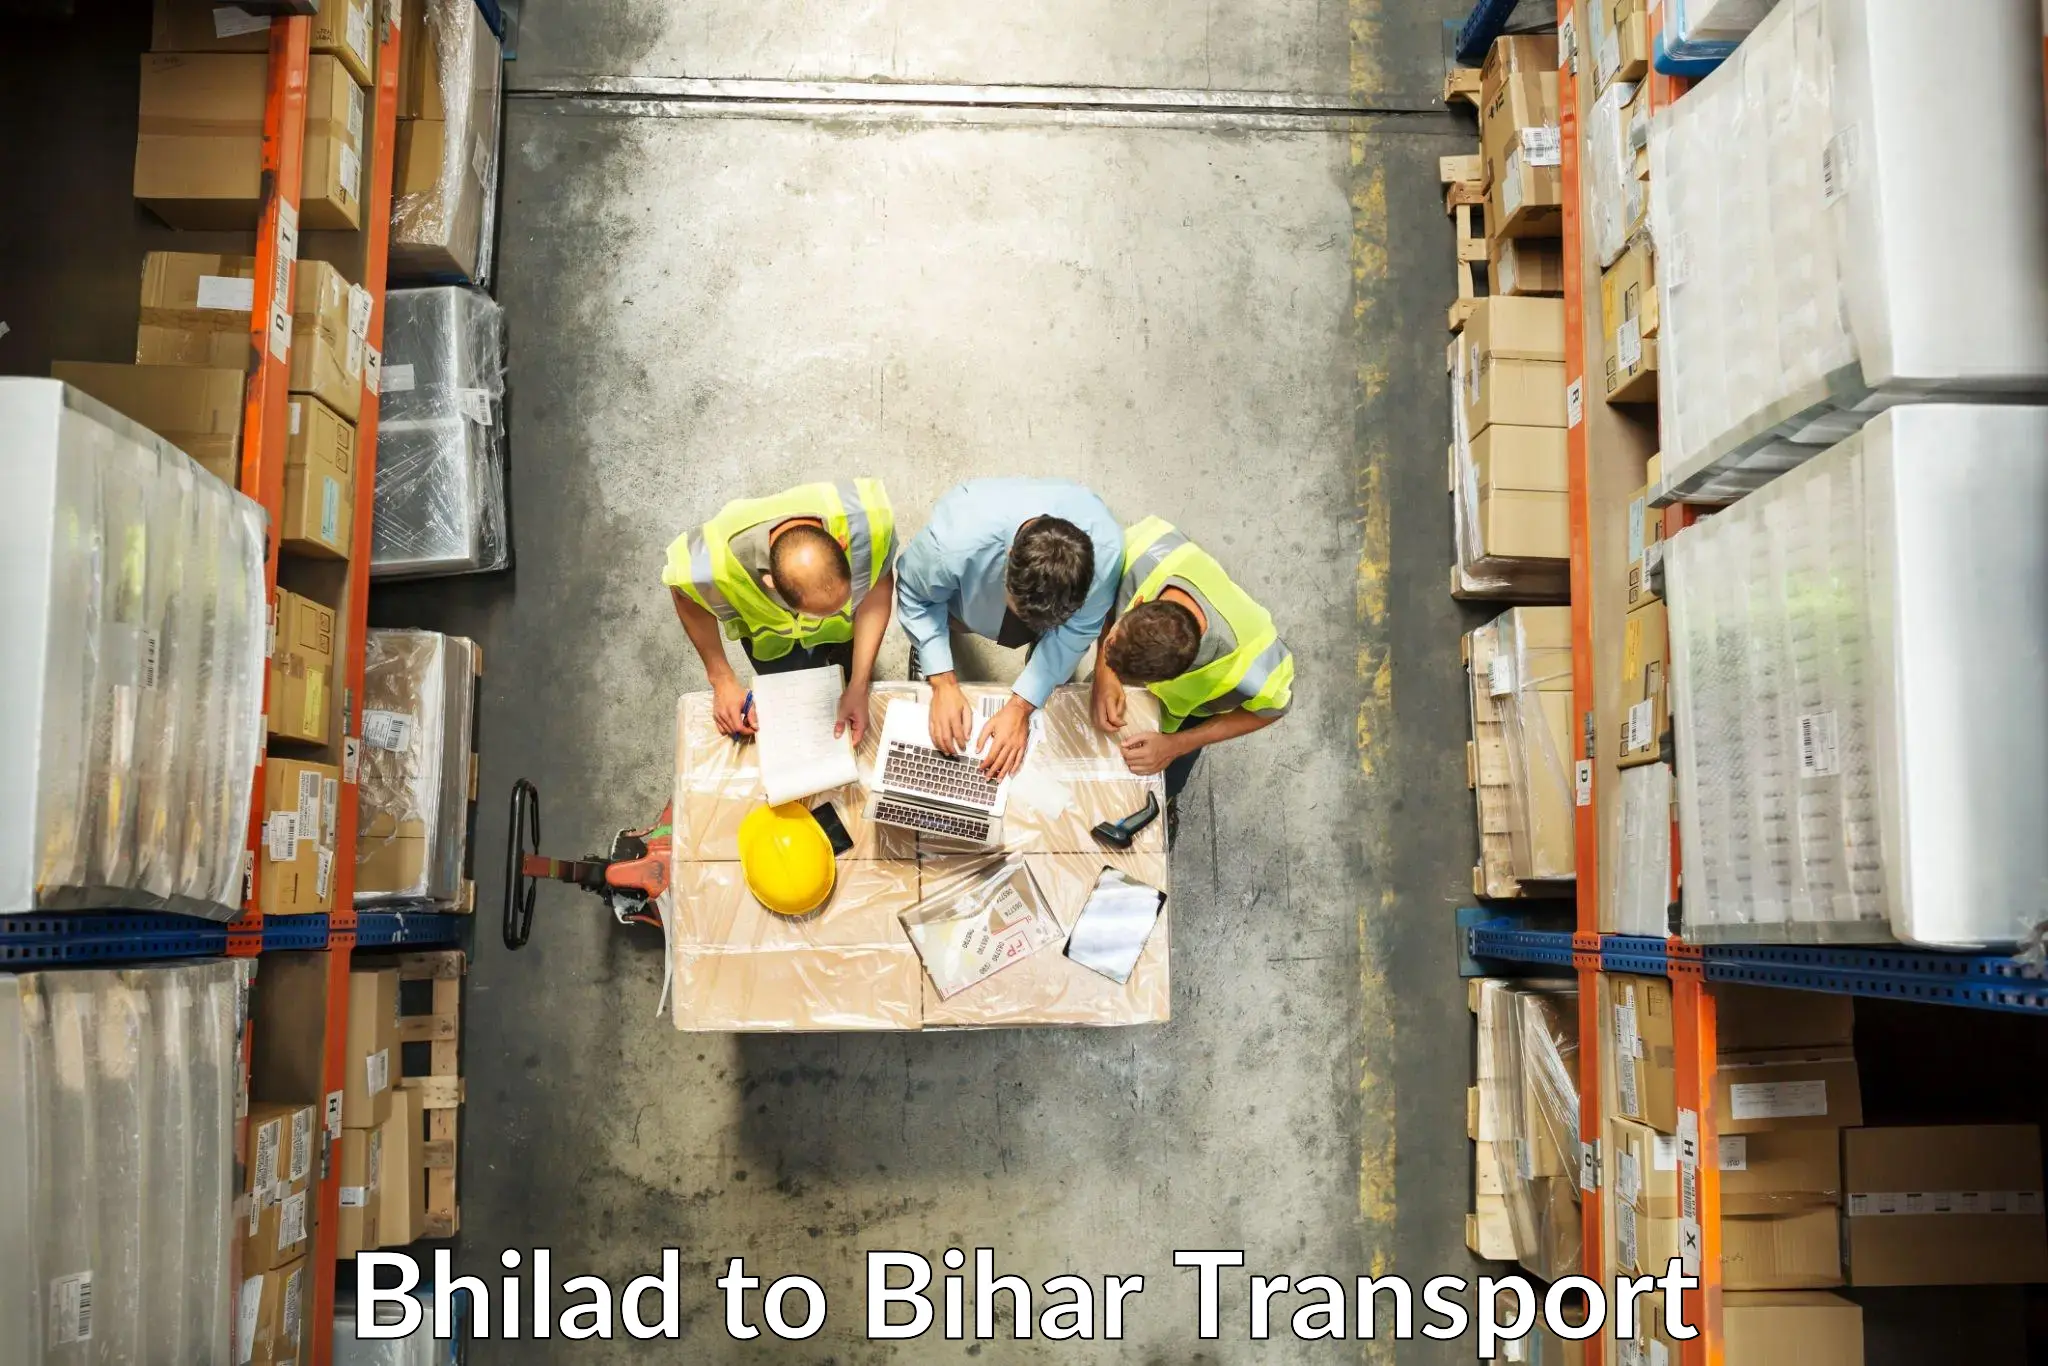 Bike shipping service Bhilad to Bihar